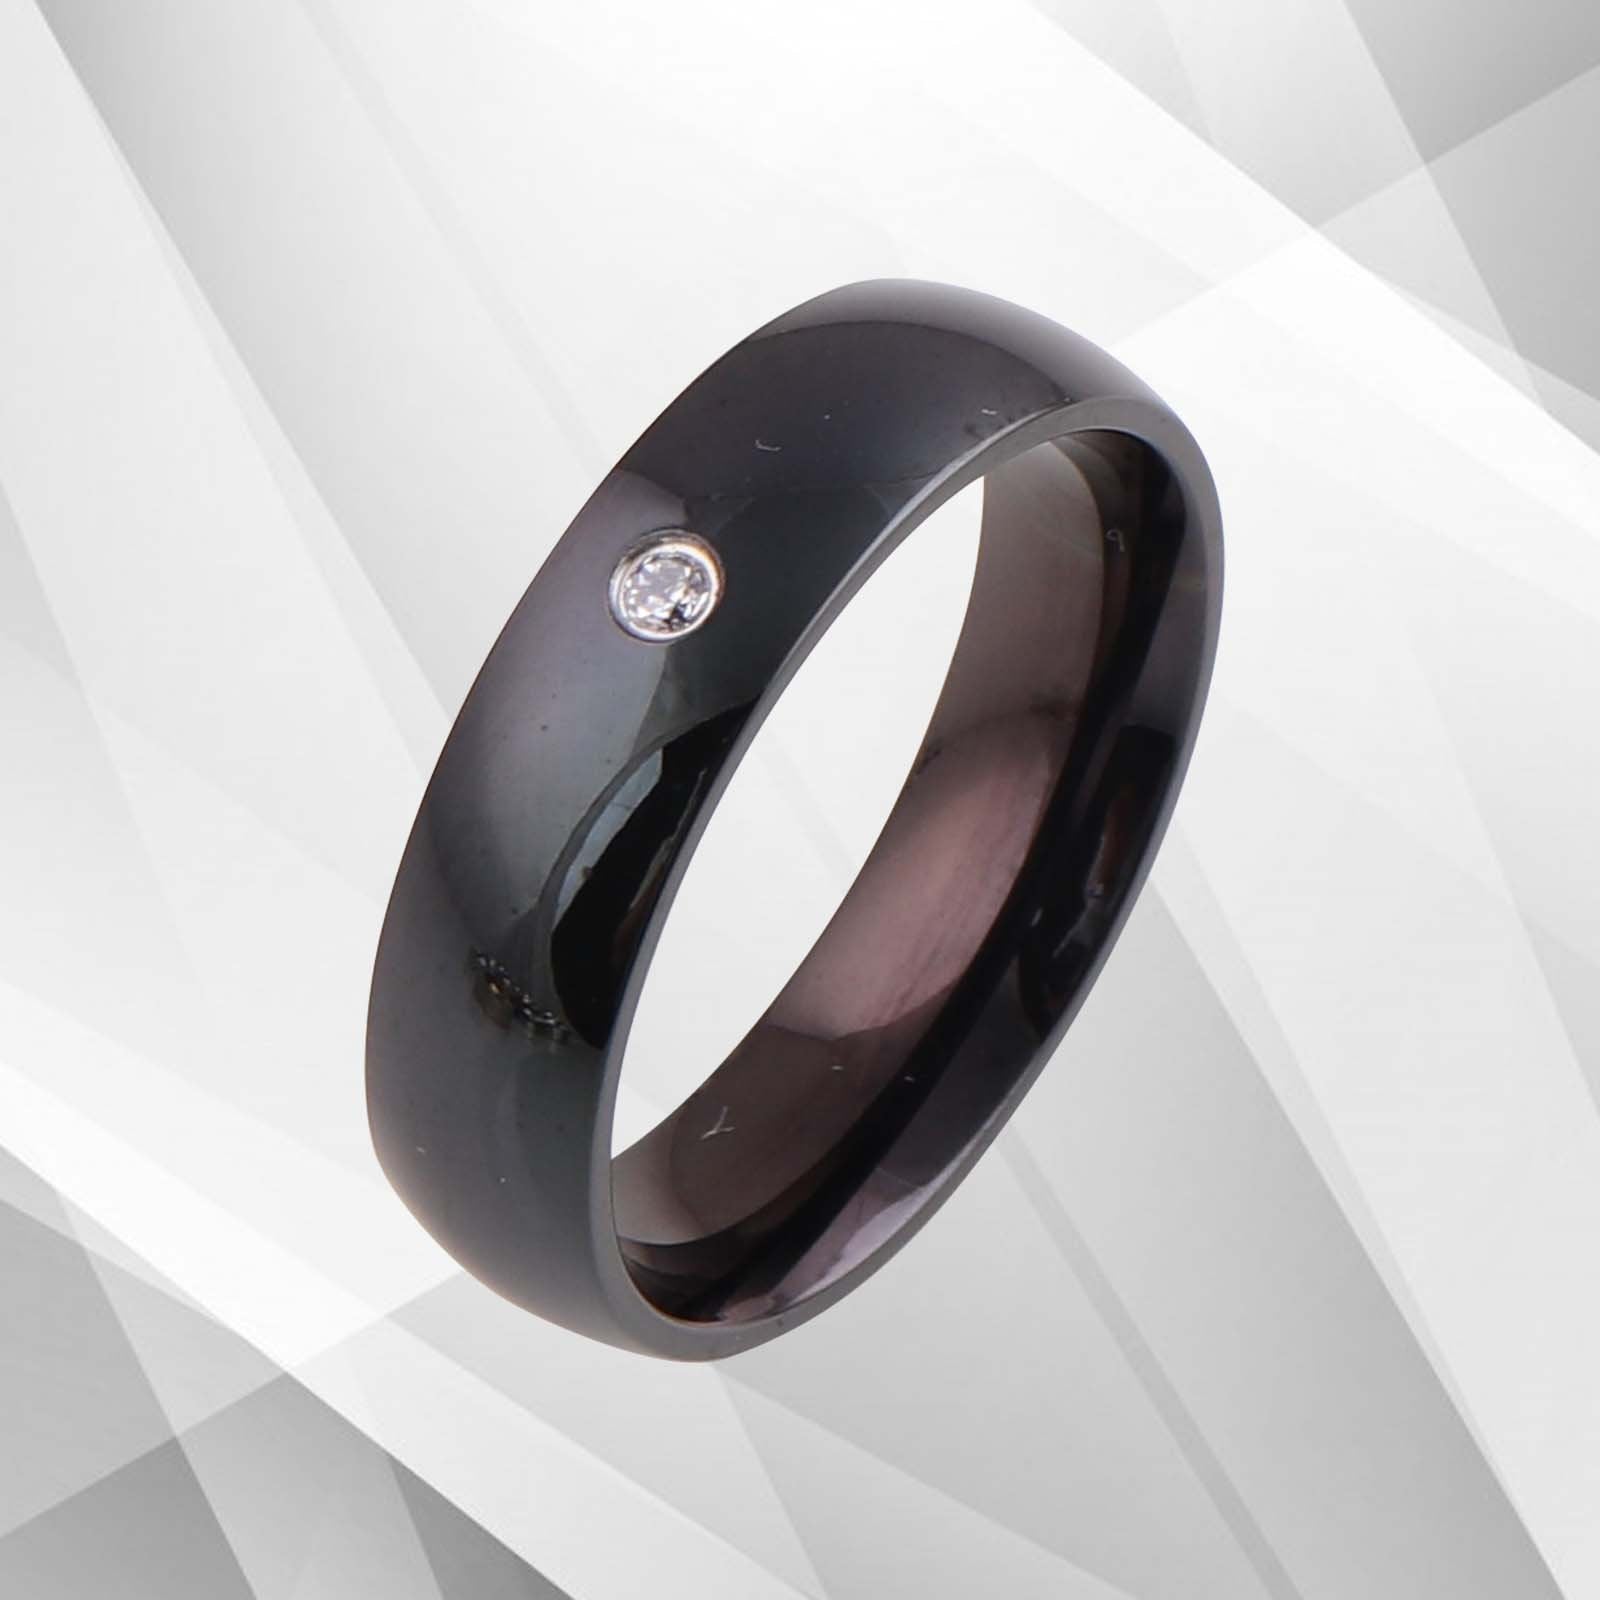 Dazzling Designer Black Titanium CZ Diamond Wedding Band Ring - 6mm Wide, Comfort Fit, Women's Gift Bijou Her